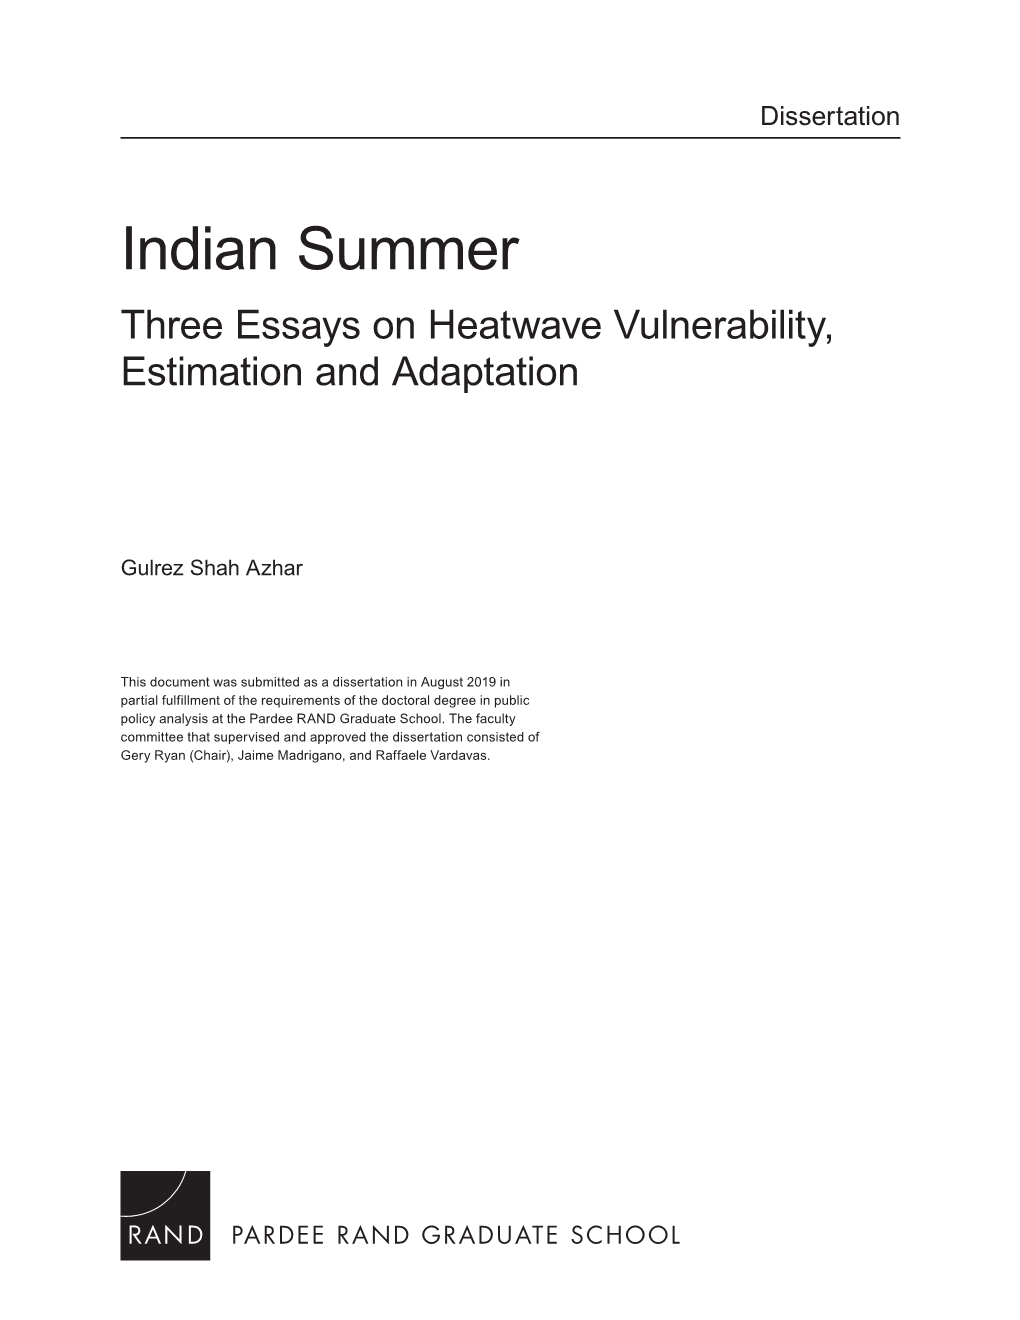 Indian Summer: Three Essays on Heatwave Vulnerability, Estimation and Adaptation”